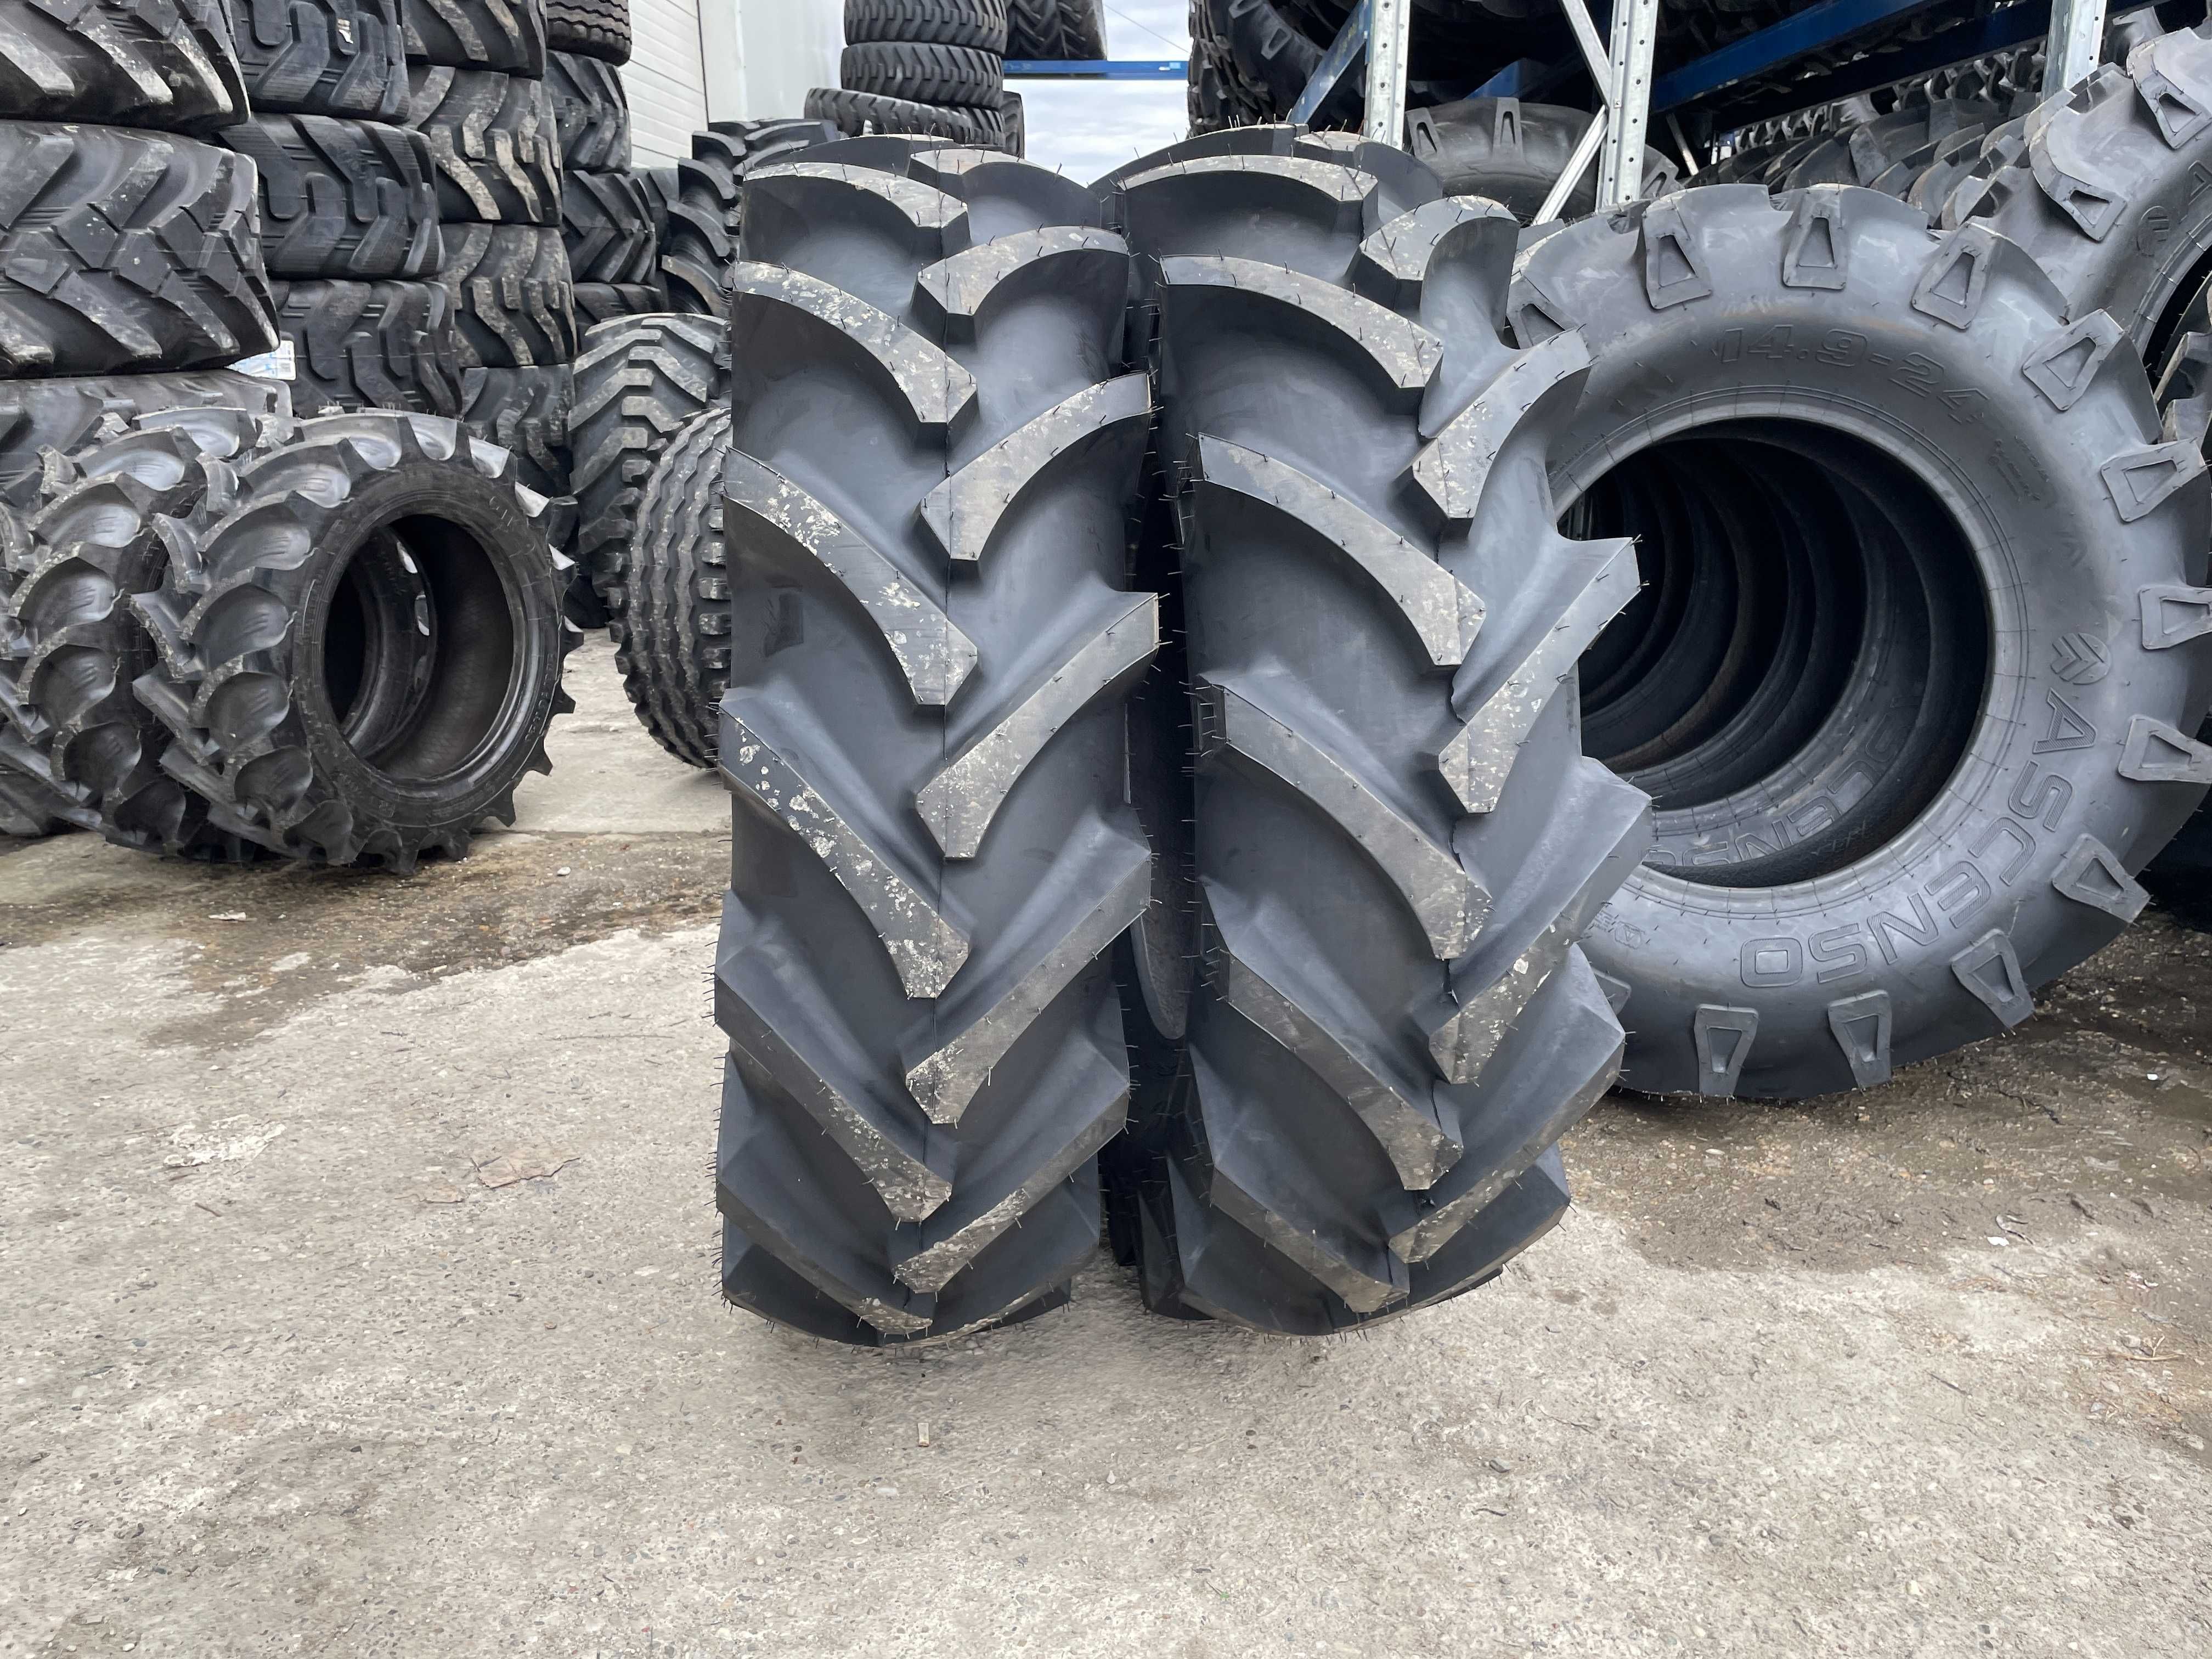 Ascenso Cauciucuri noi agricole de tractor 8PLY  14.9-24 garantie